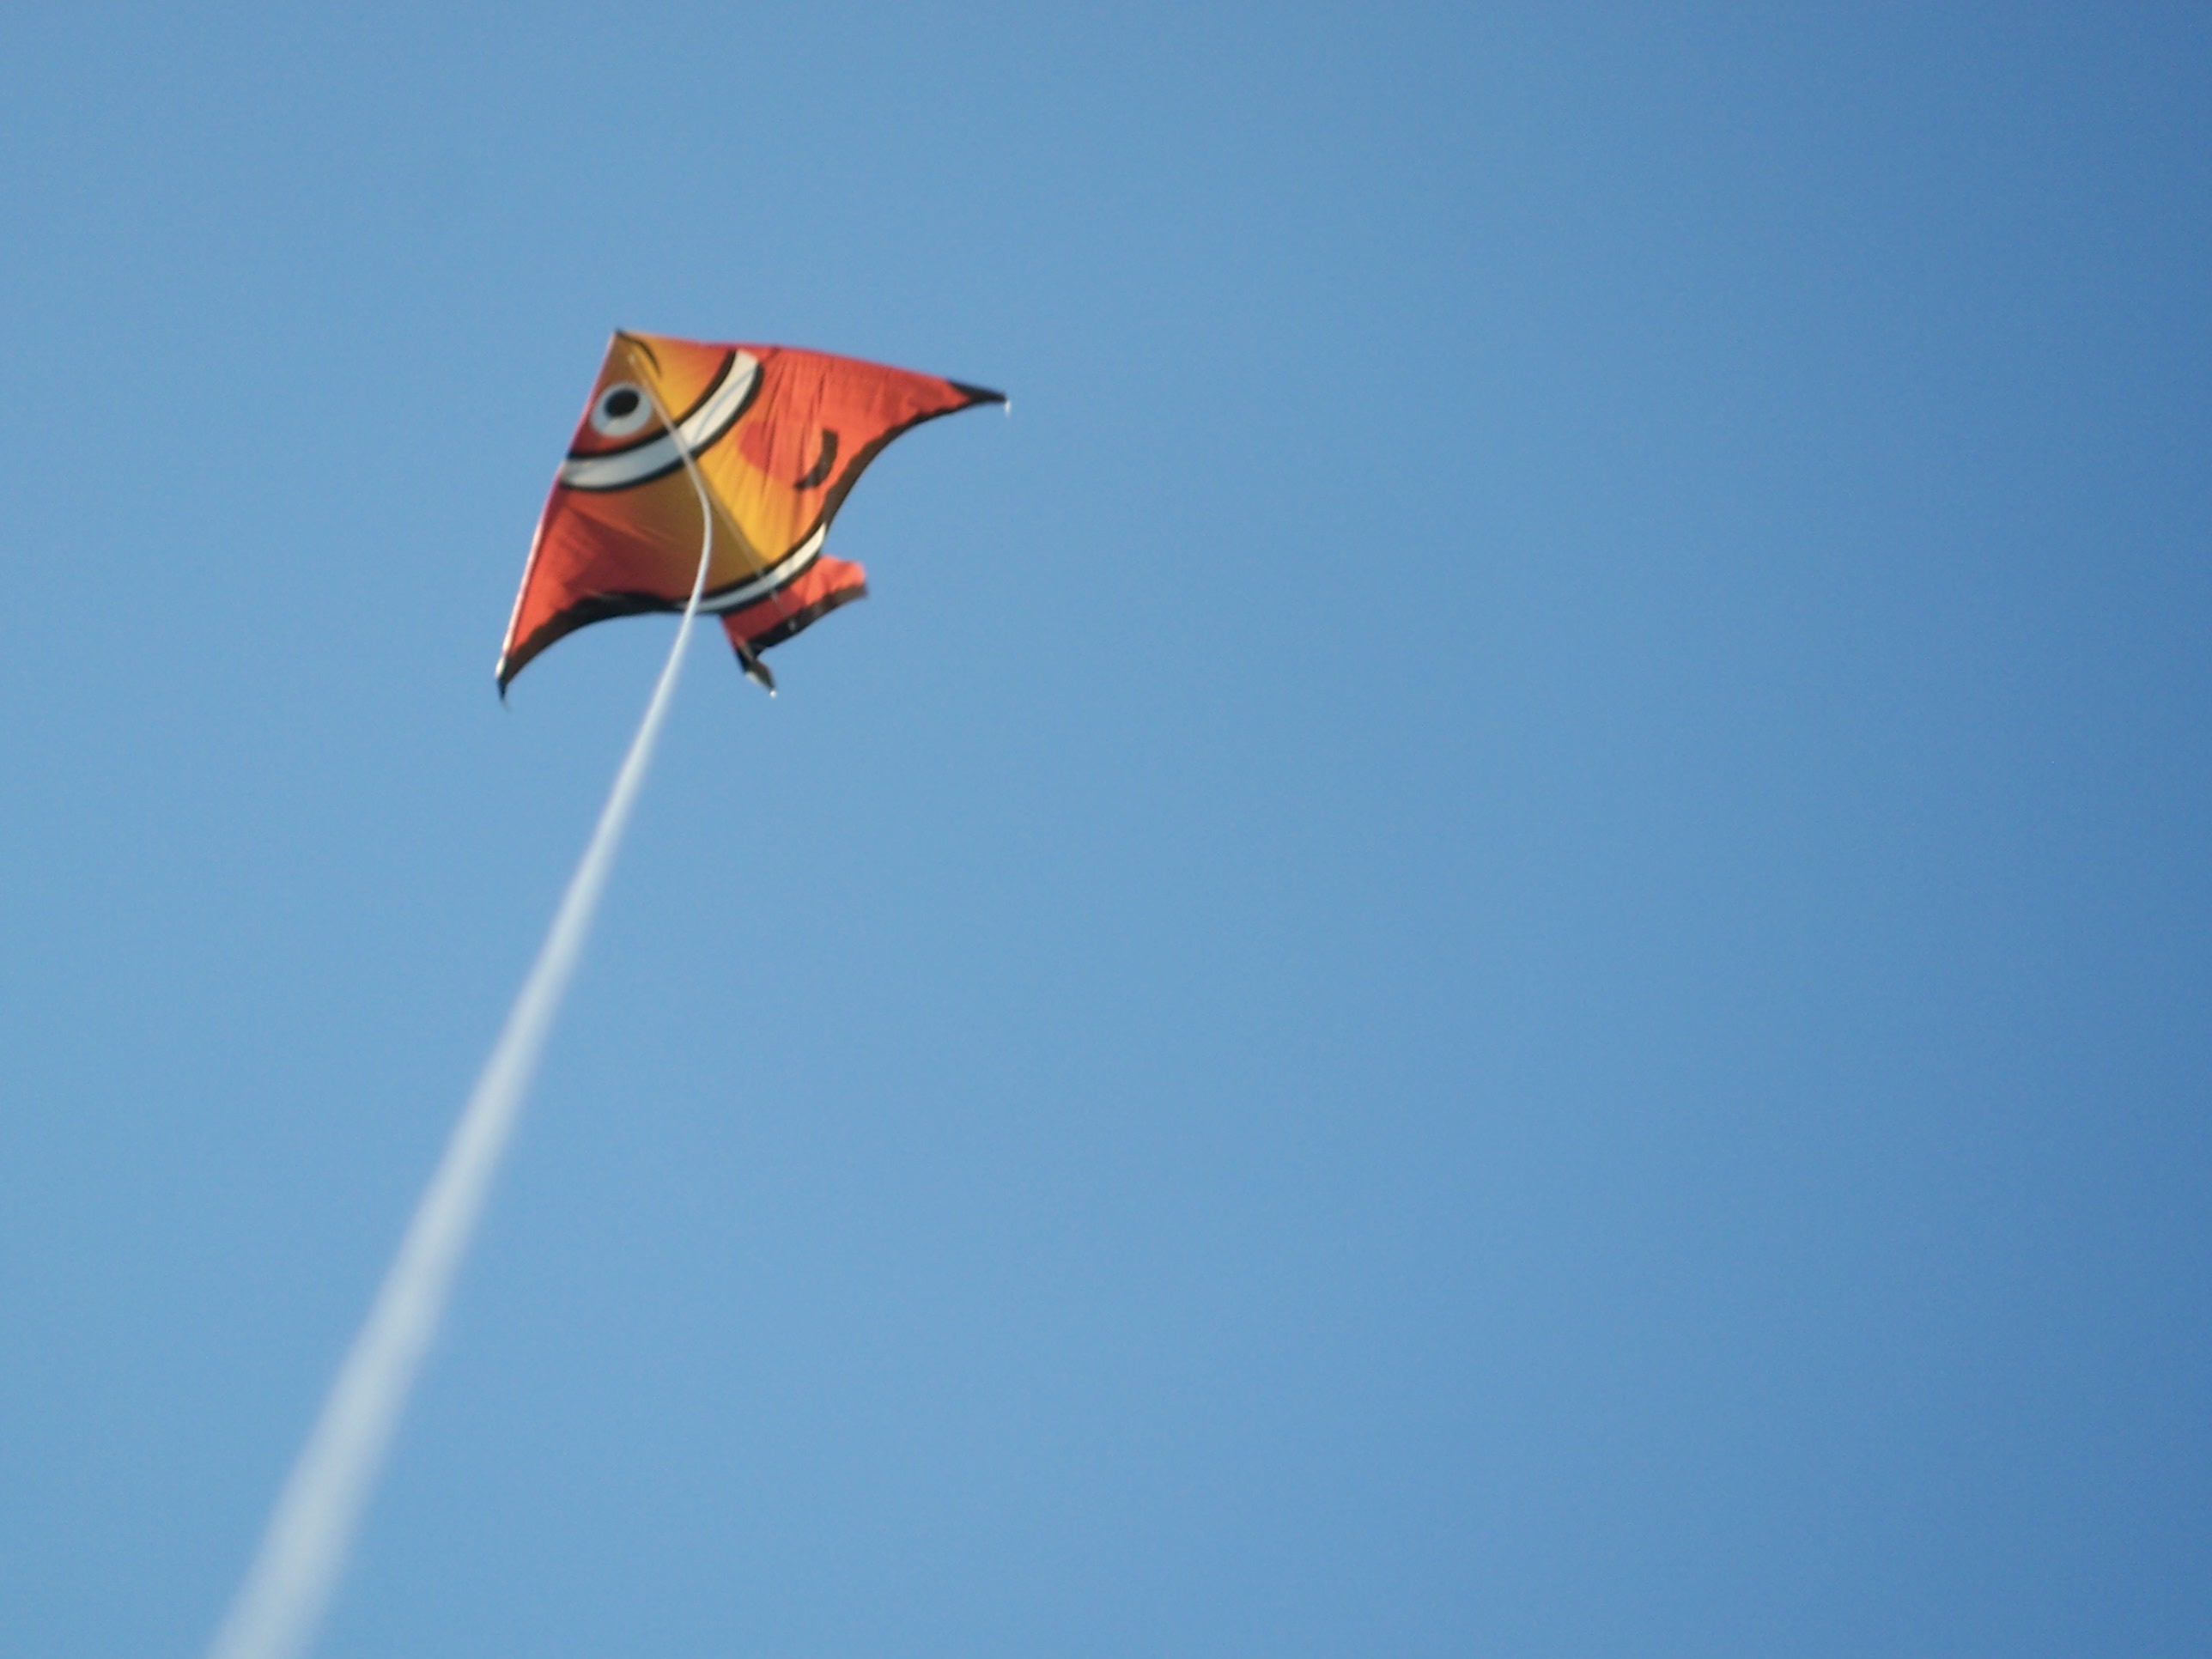 Mount Vernon Ohio Kite Flying in Knox County Ohio photo by Sam Miller